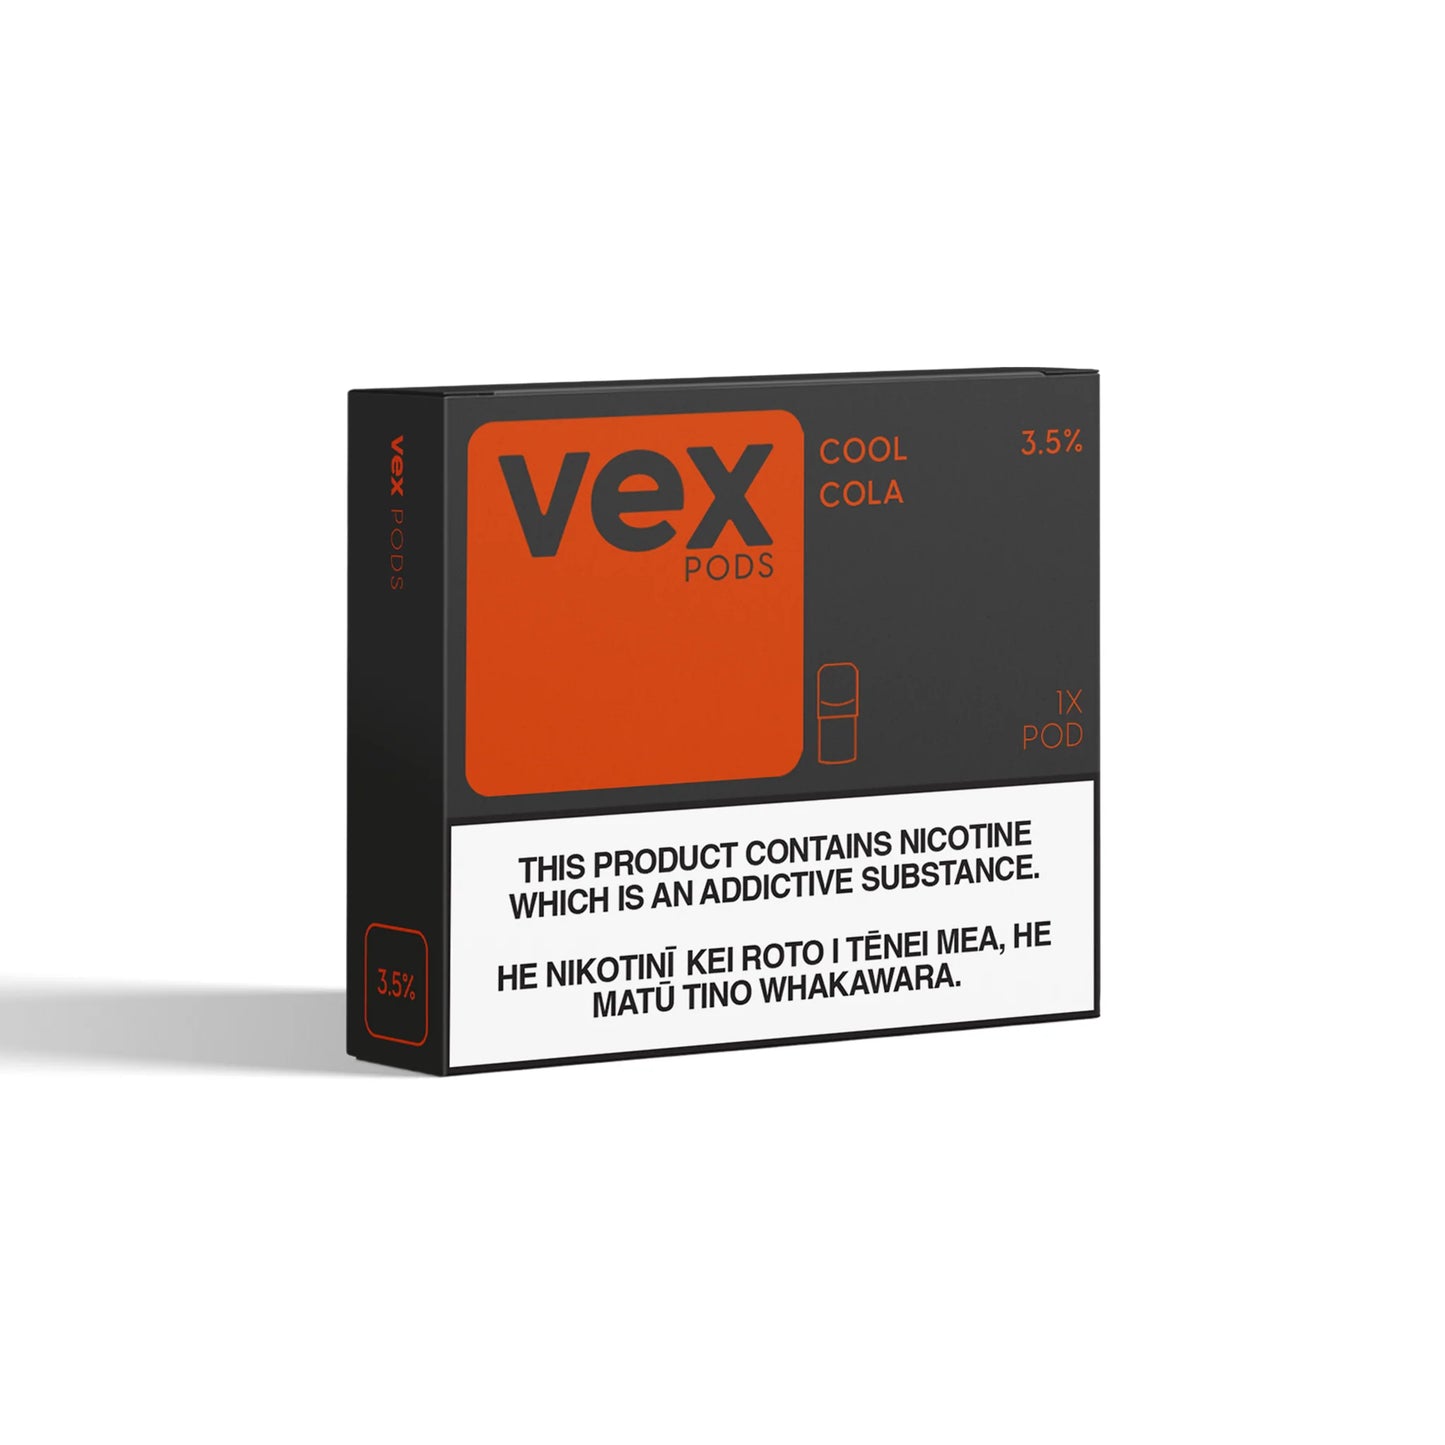 VEX - Cool Cola 3.5% - 2020 Vapes